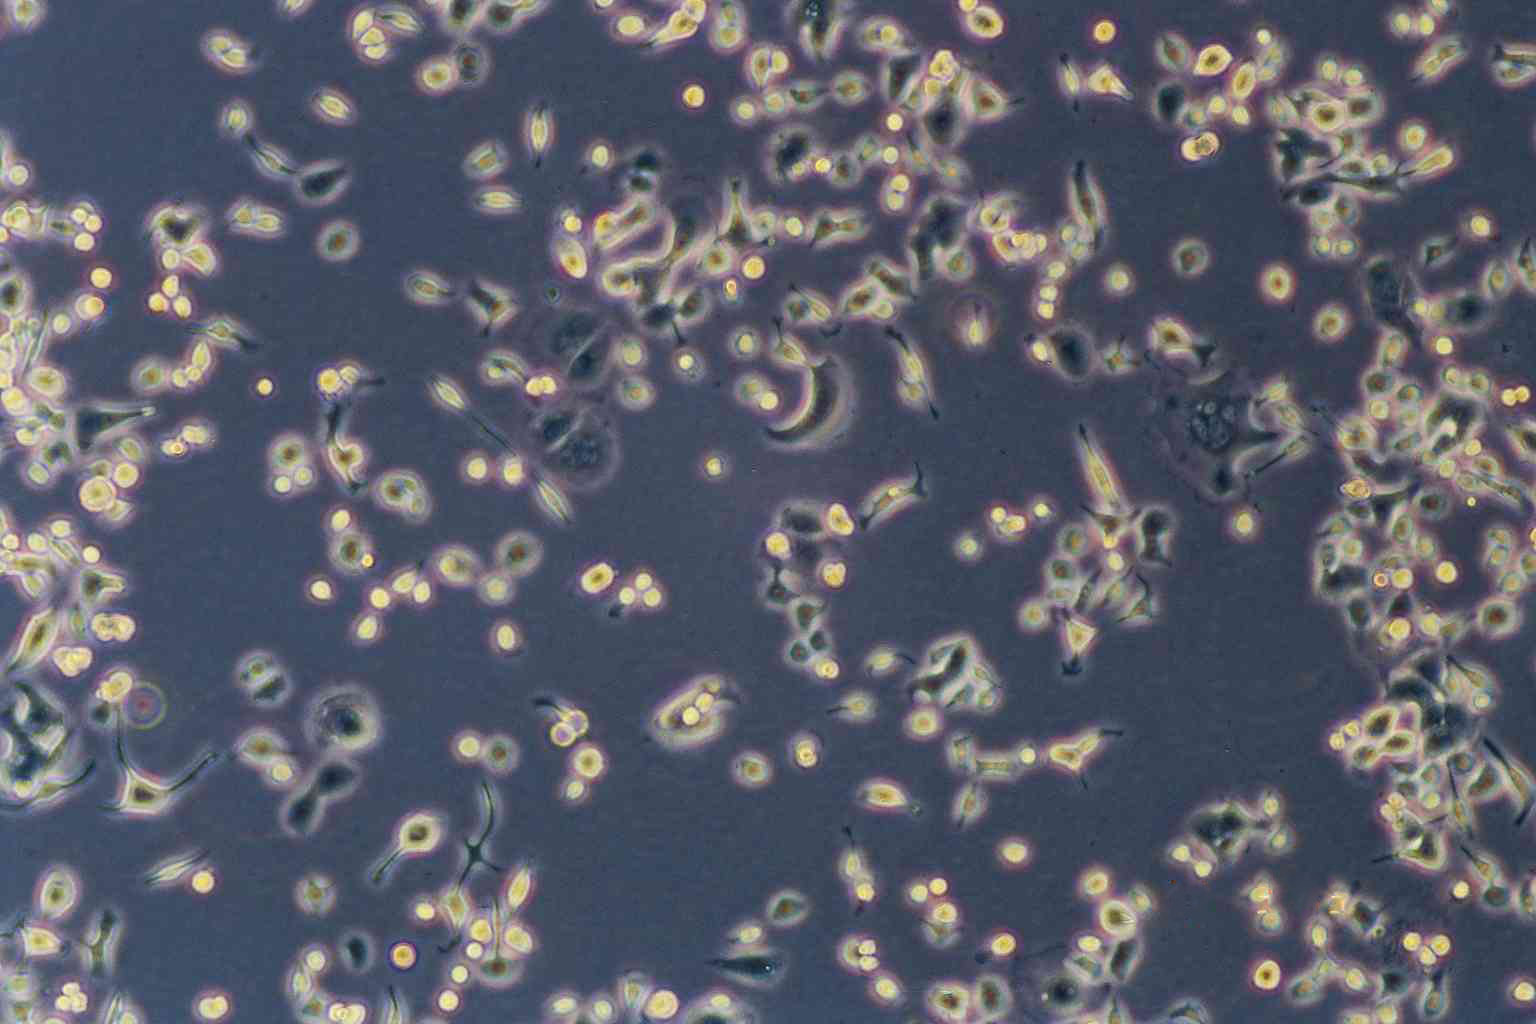 HAPI epithelioid cells大鼠小胶质细胞系